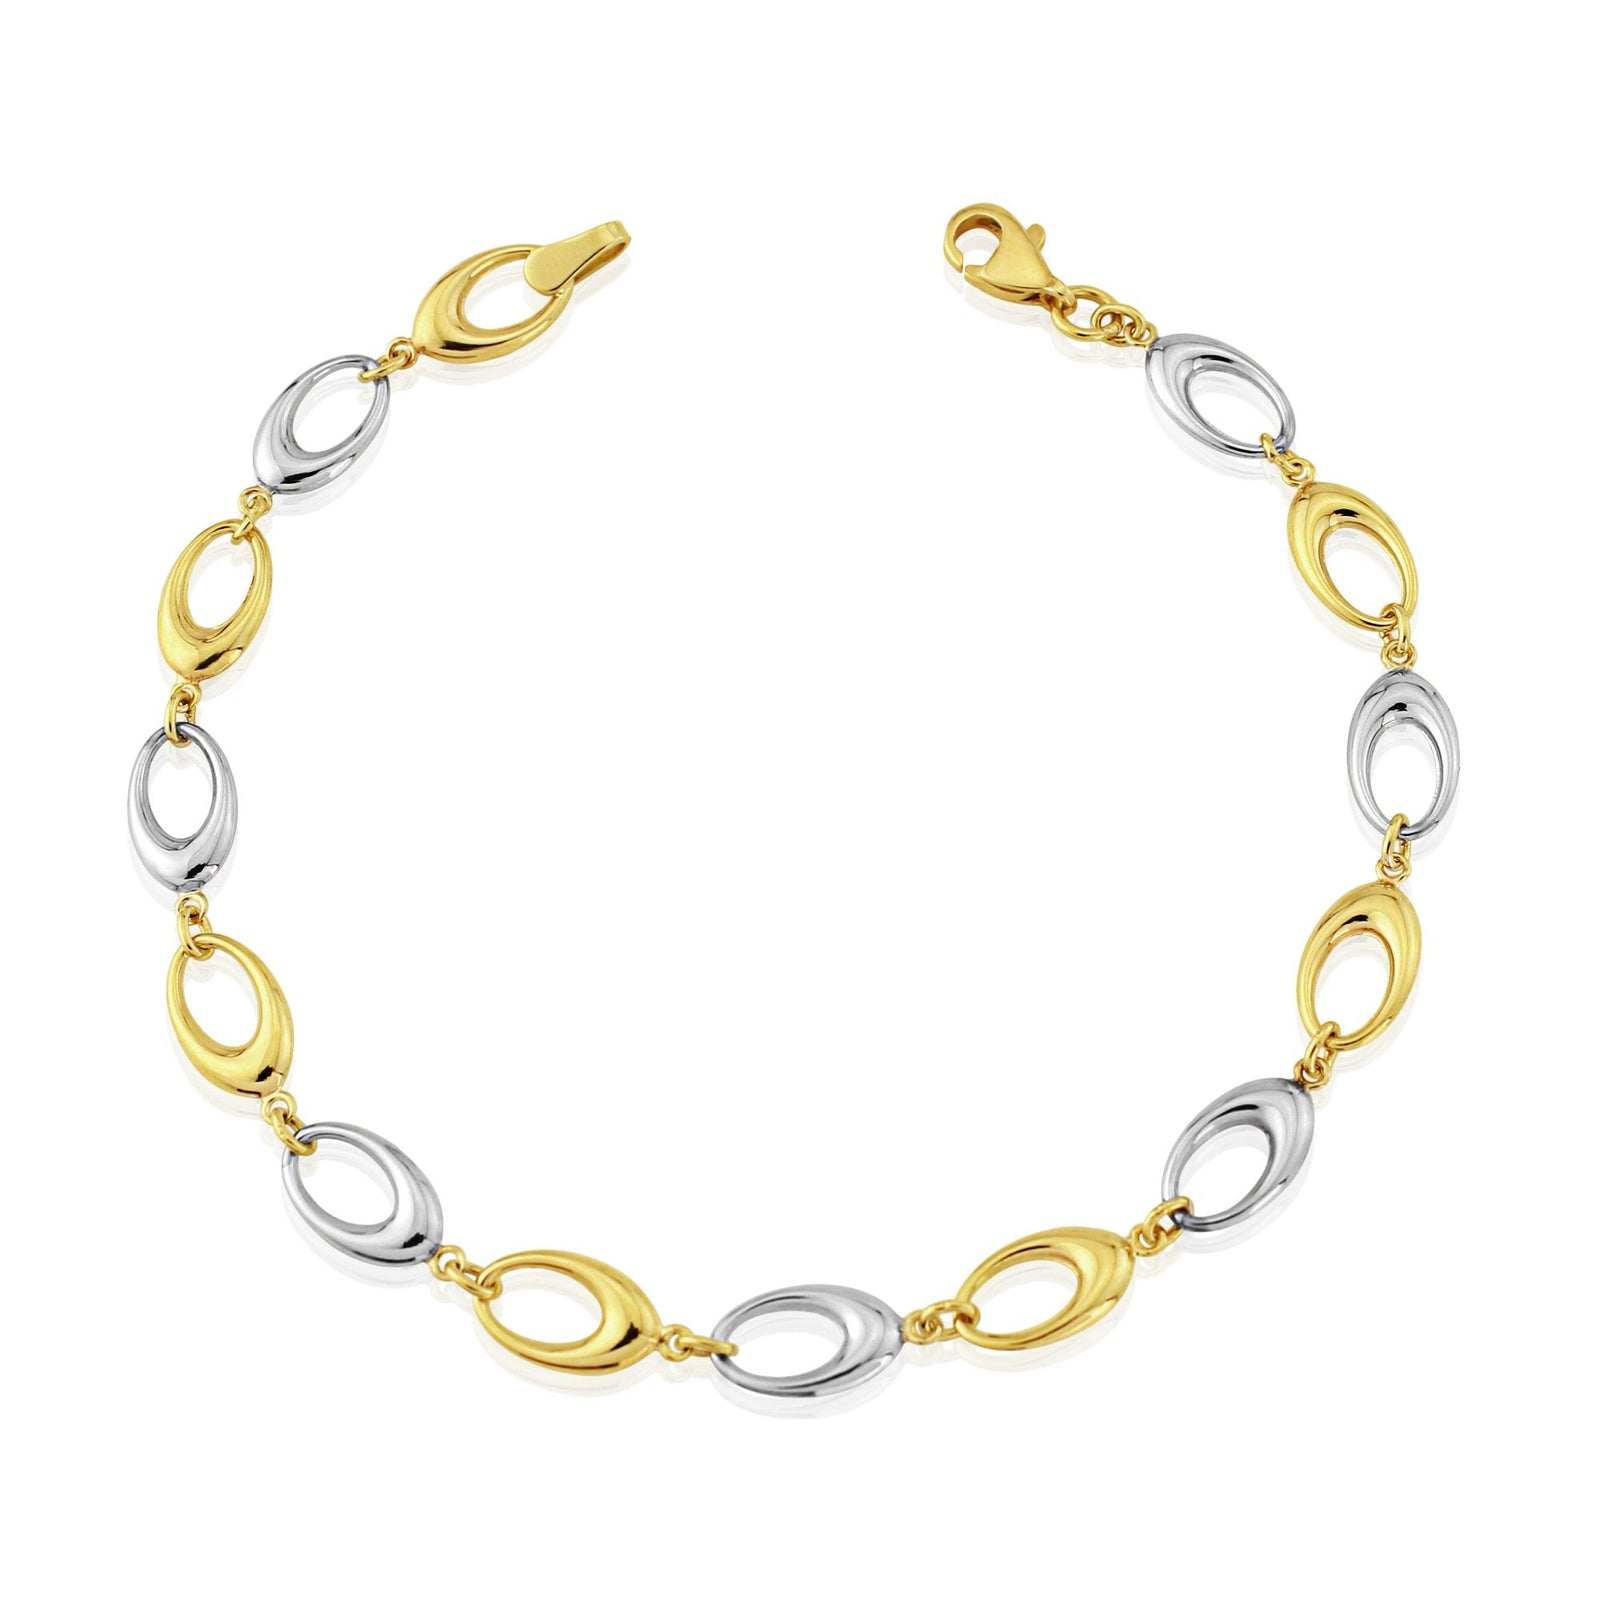 9ct yellow & white gold bracelet